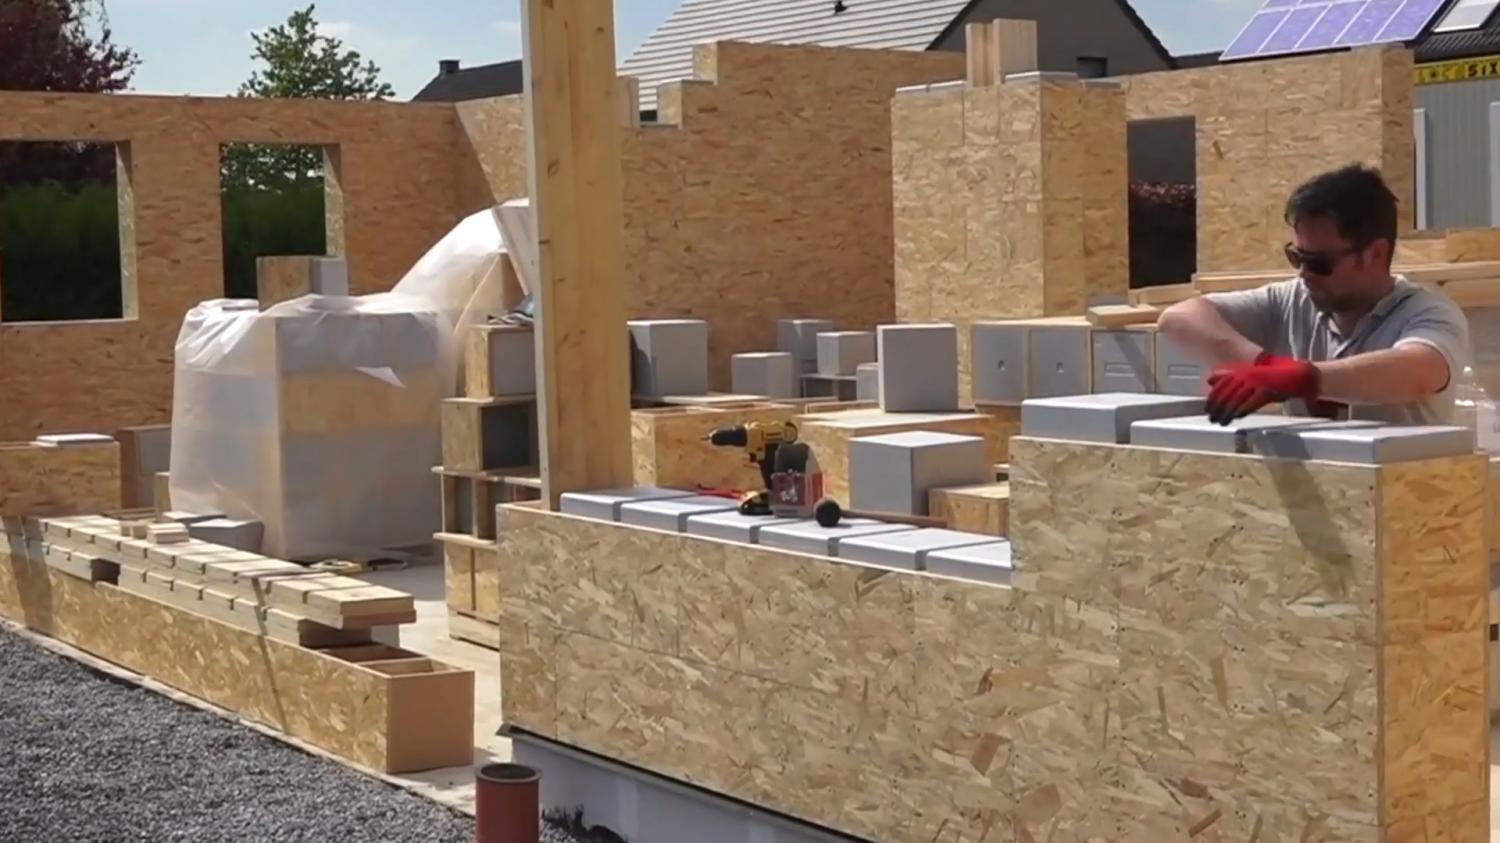 Gablok Giant LEGO-like Building Blocks To DIY Home Build